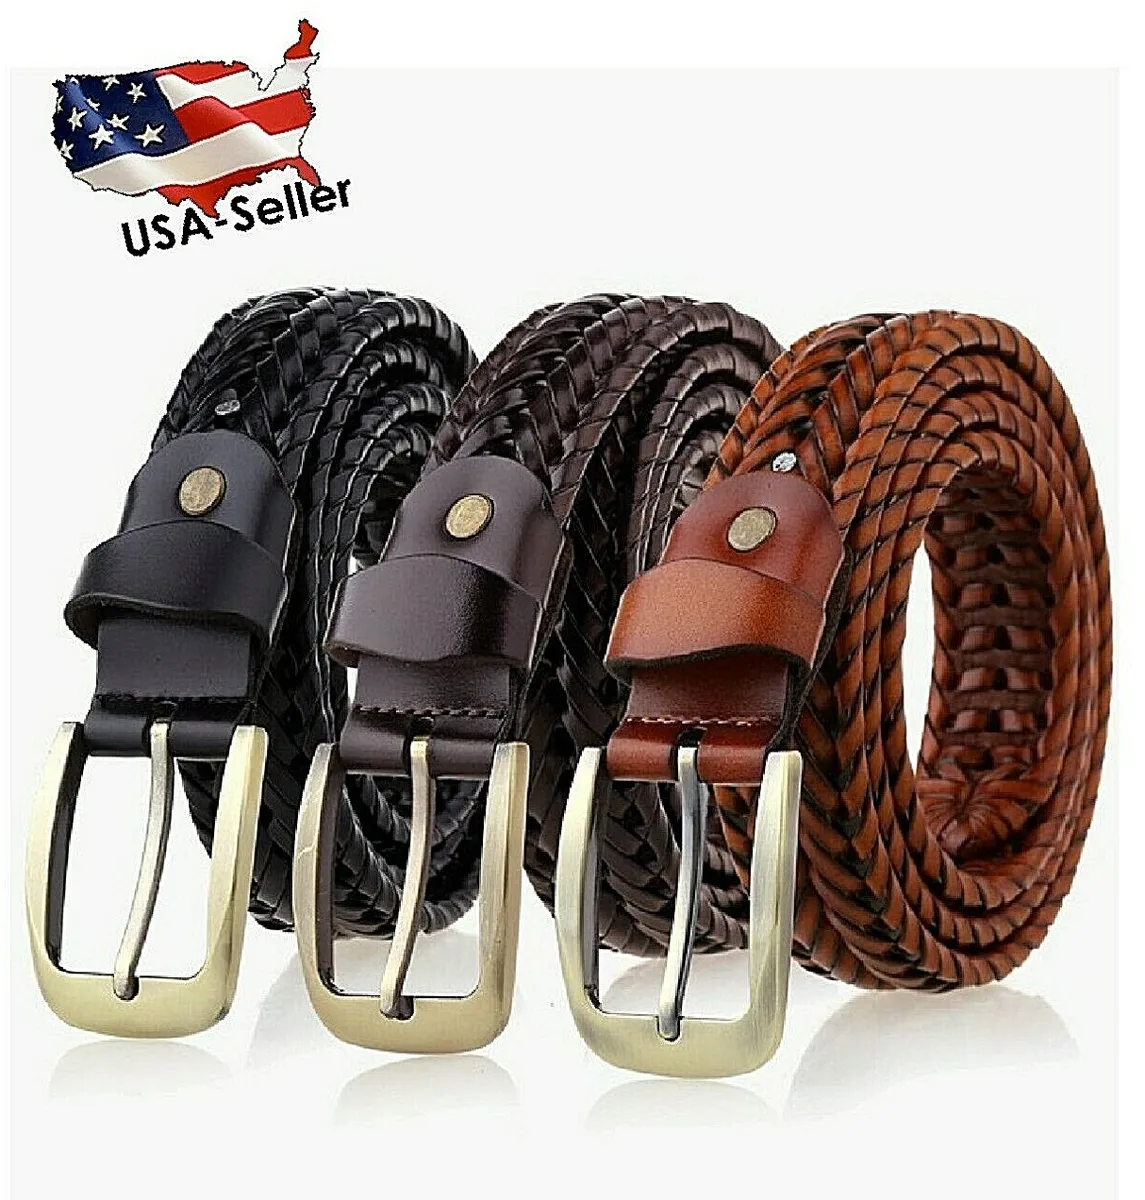 Full Grain Leather Belt Set | Double Pin Roller Buckles |Gifts for Men